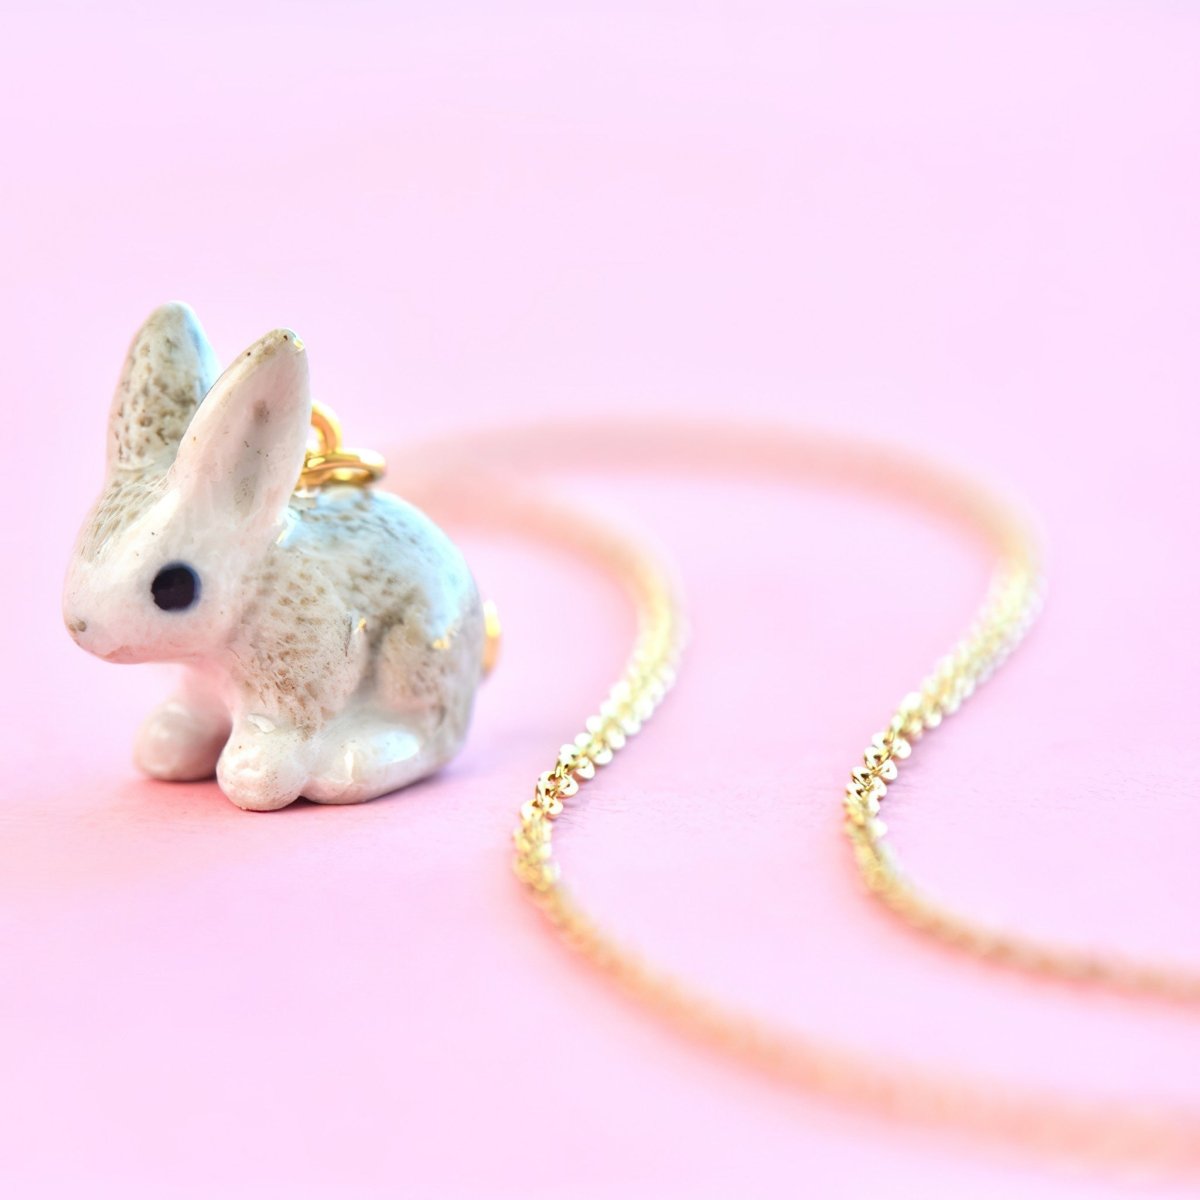 Rabbit Necklace | Camp Hollow Ceramic Animal Jewelry